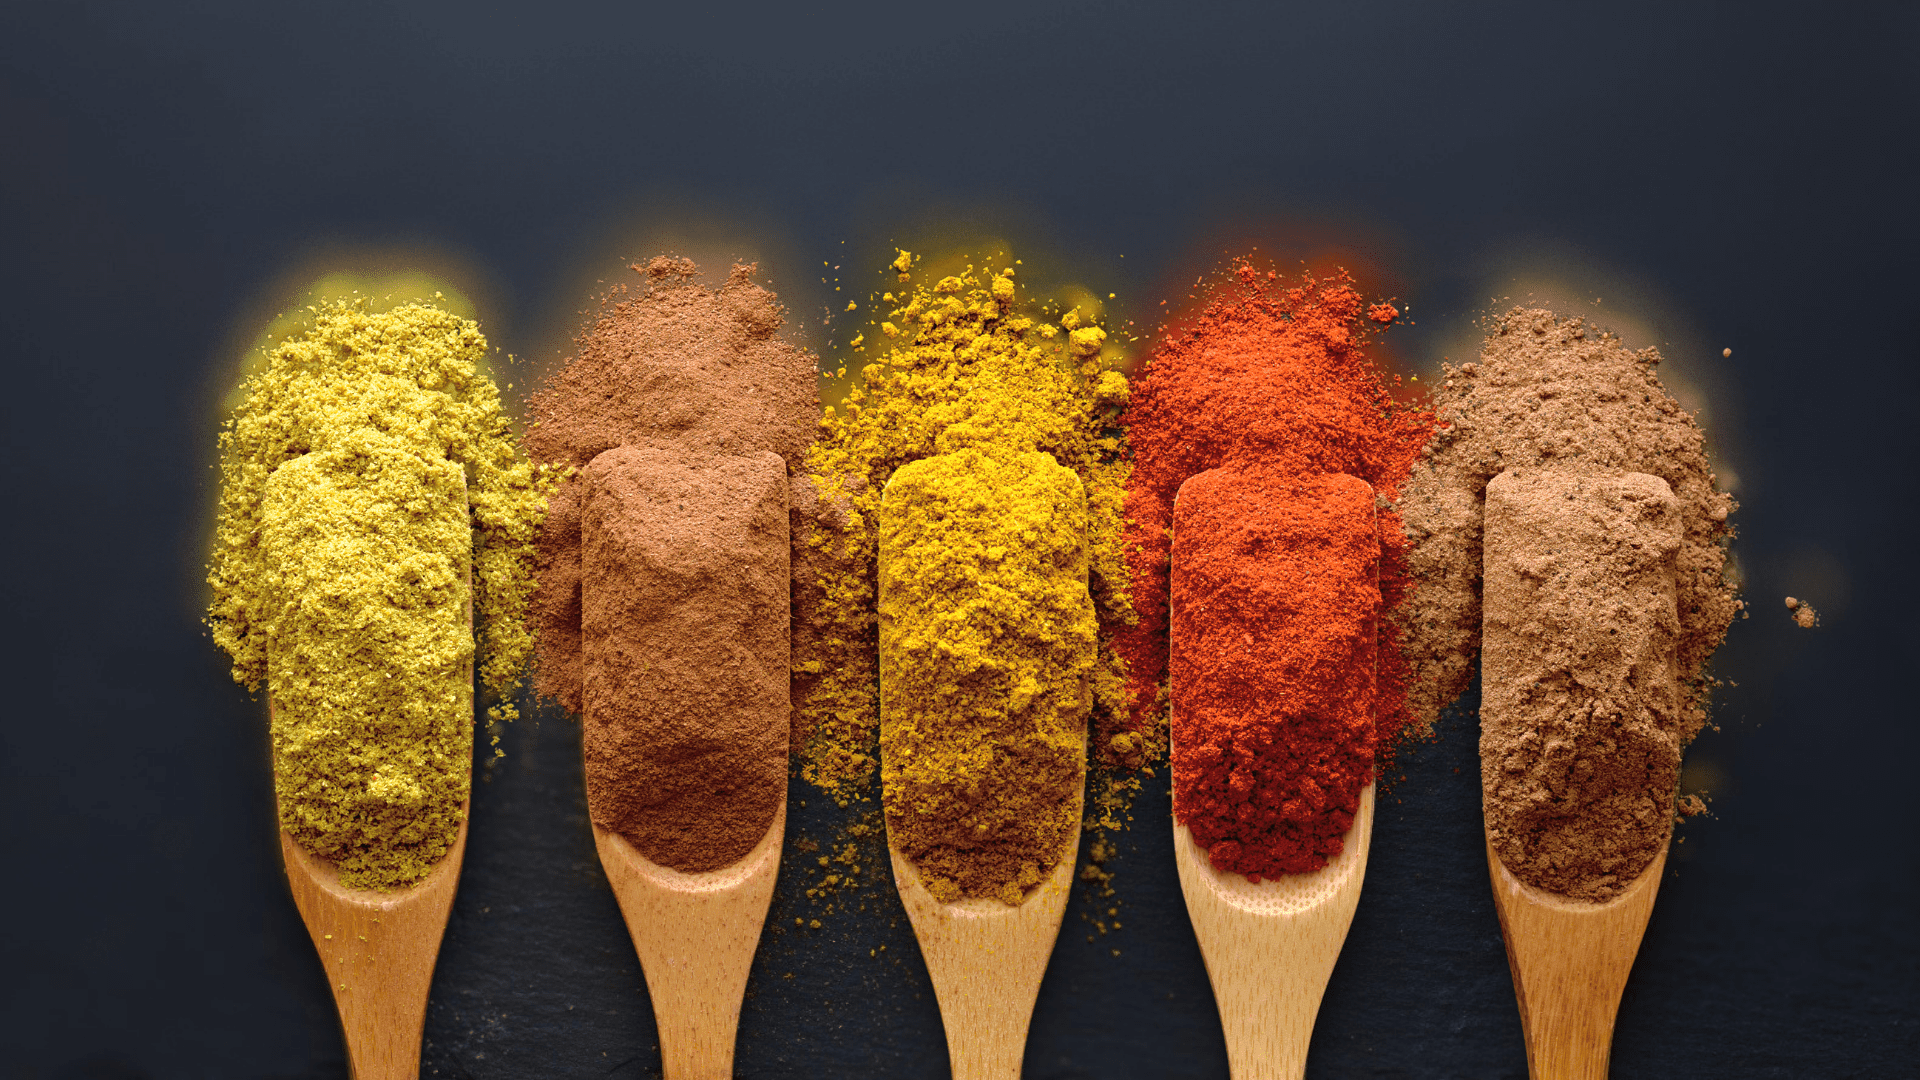 Best annatto powder substitutes | 10 best spice powders to use